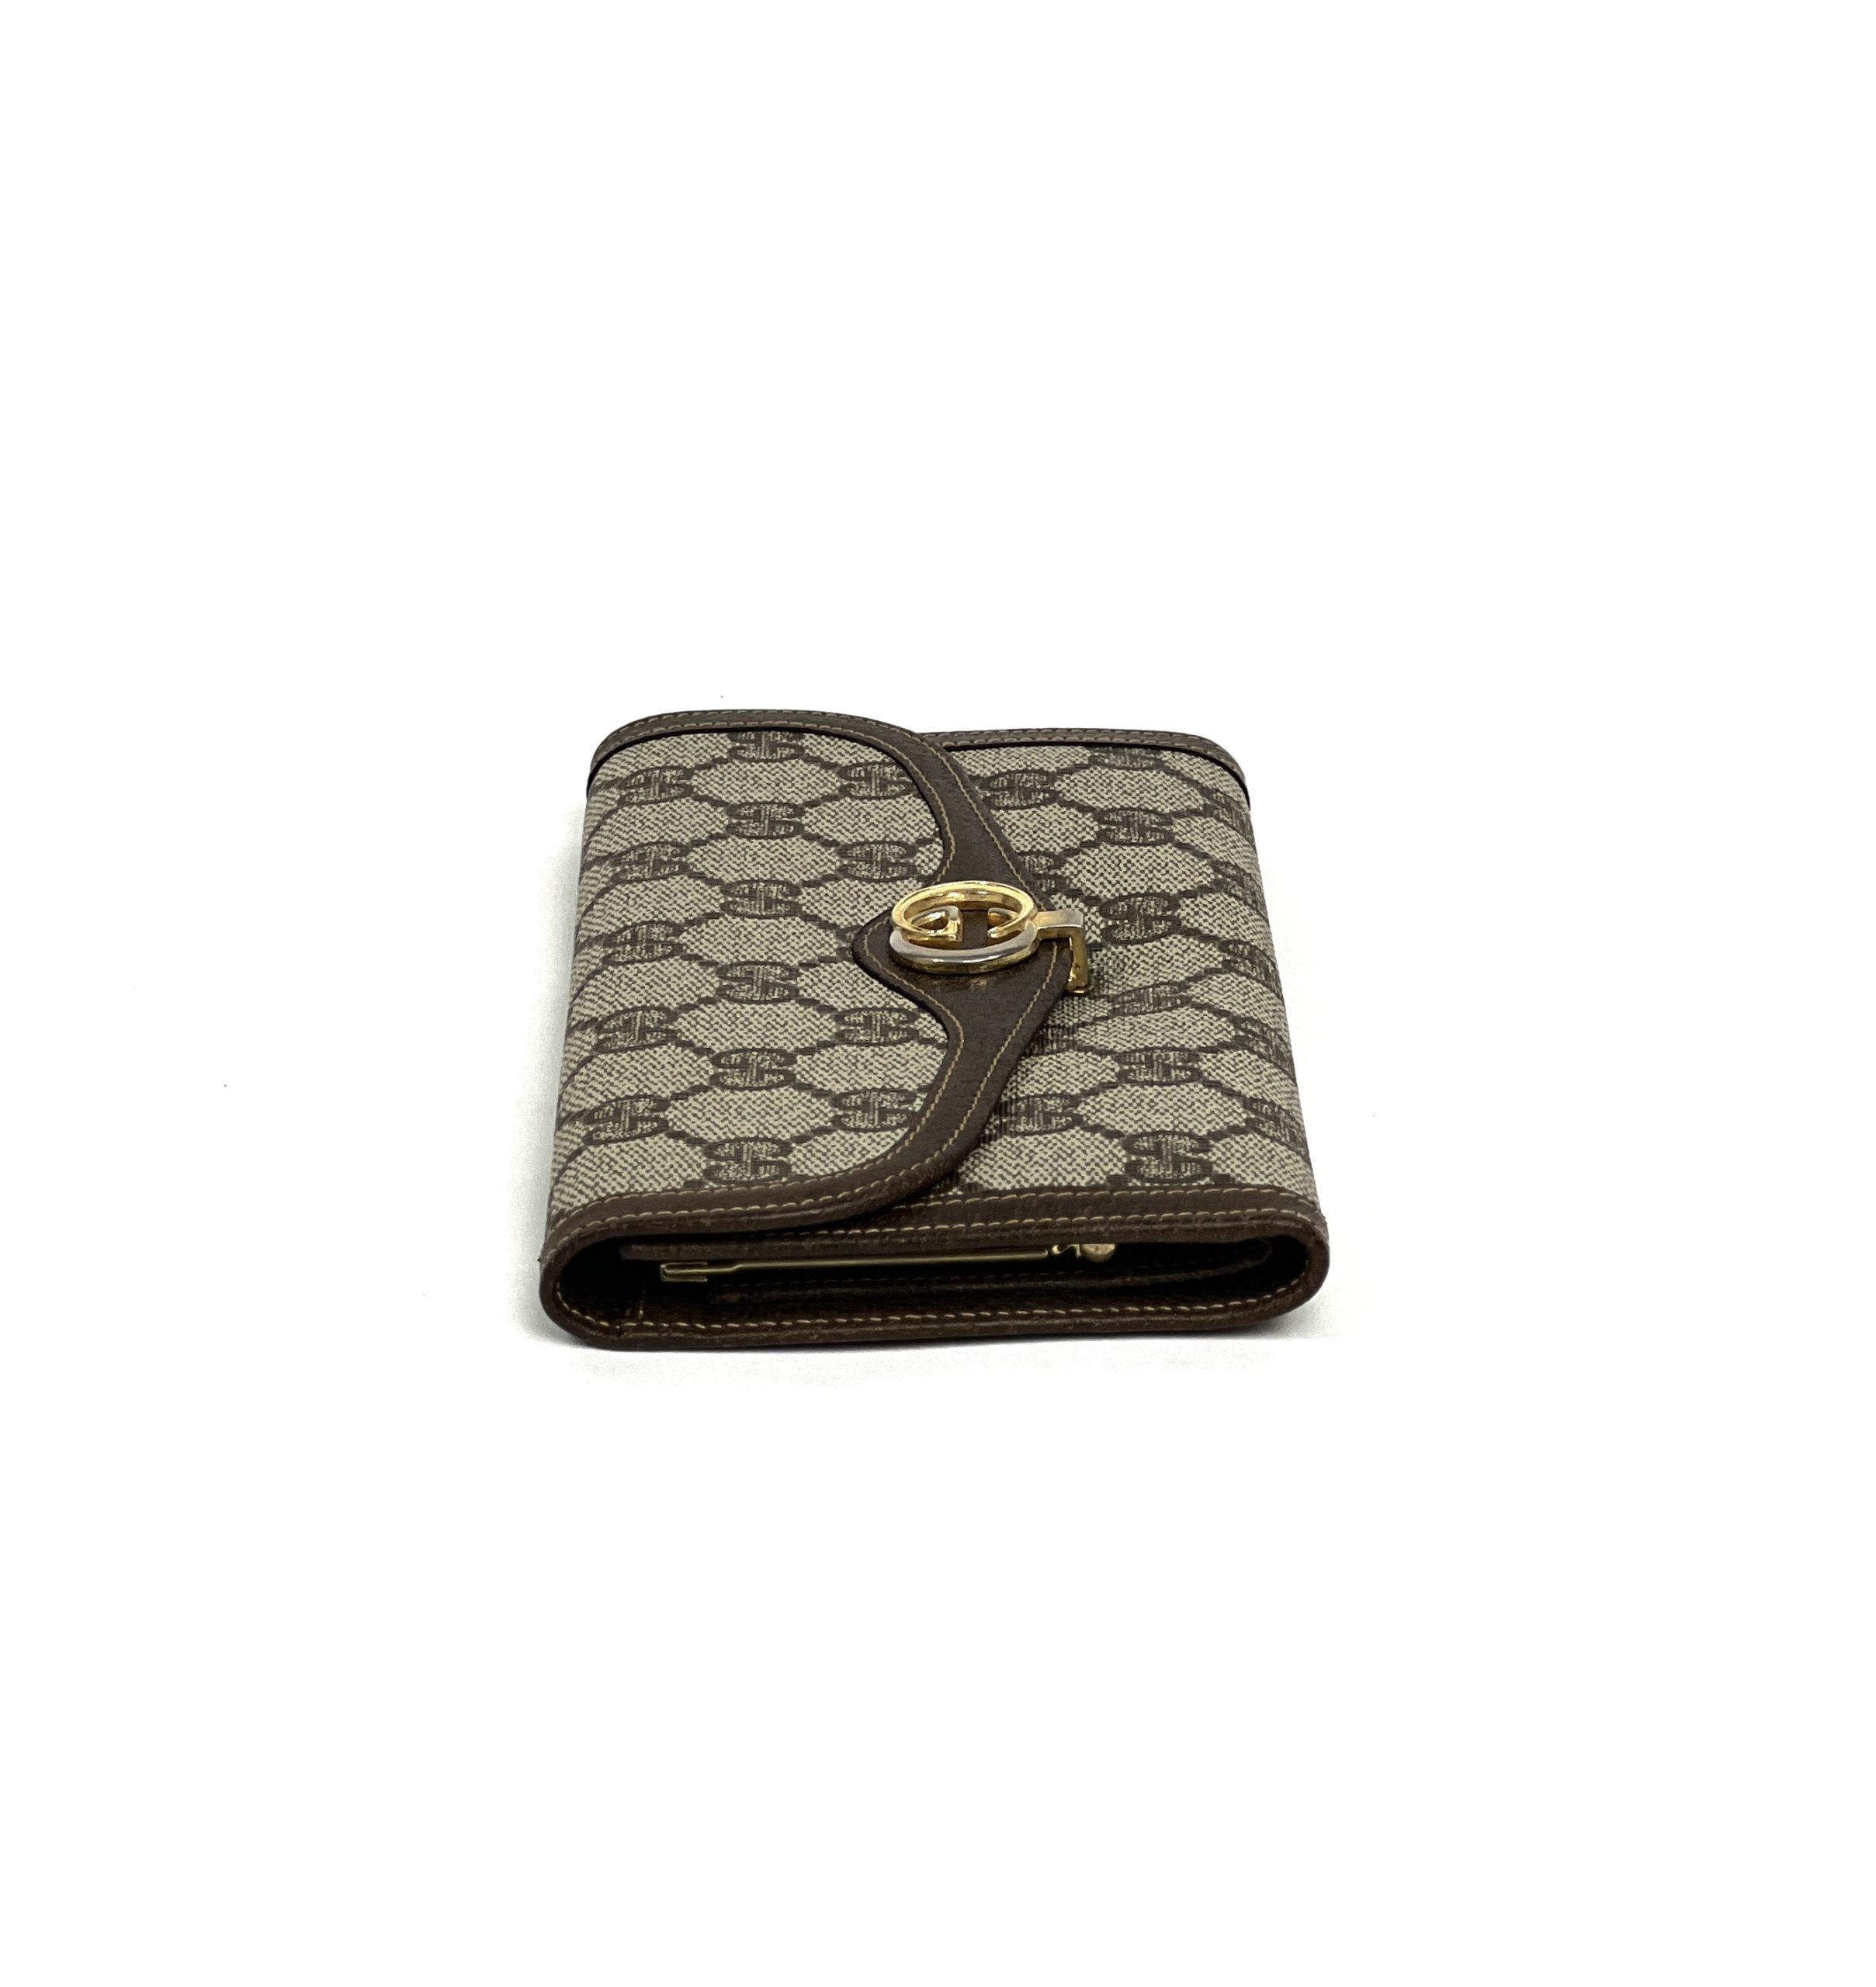 Vintage Gucci Dark Brown Leather Wallet